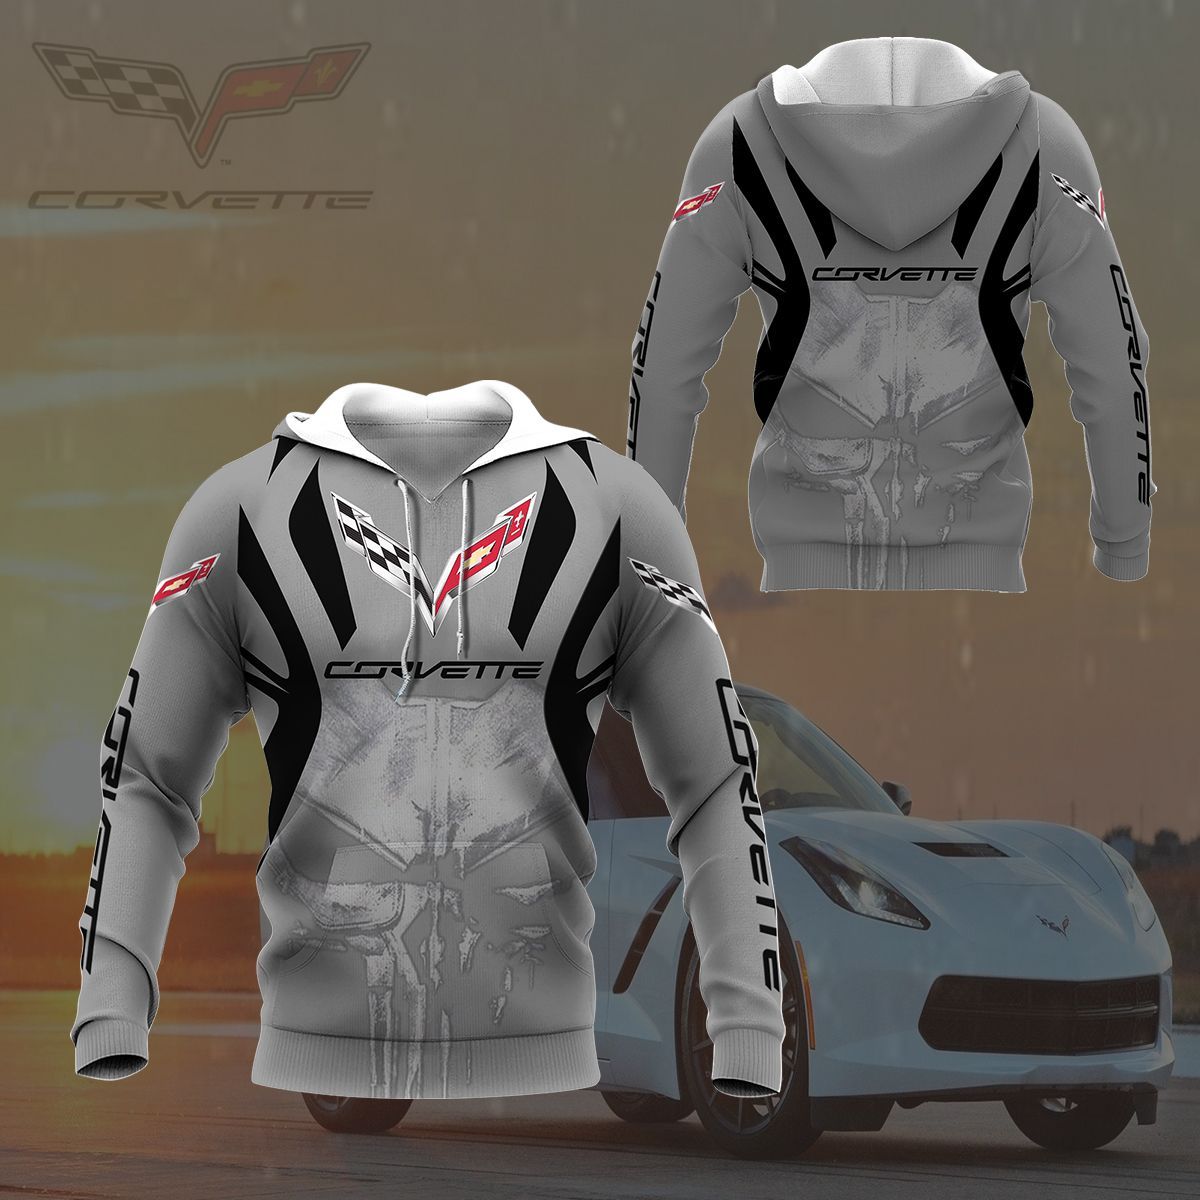 3D All Over Printed Chevrolet Corvette  Shirts Ver 1 (Grey)